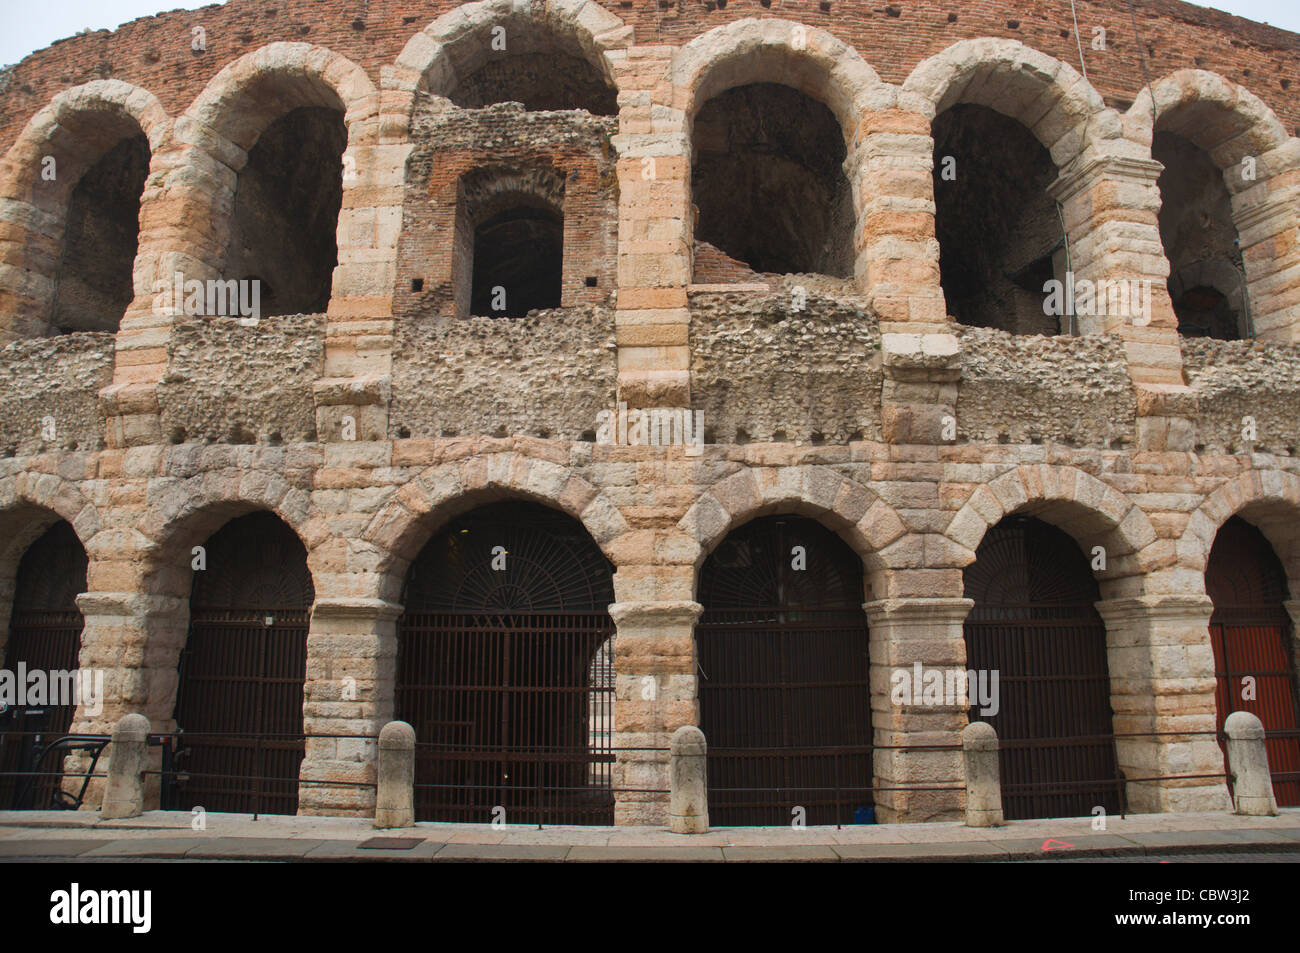 Ancient Roman Arena amphitheater Piazza Bra square old town Verona the Veneto region northern Italy Europe Stock Photo